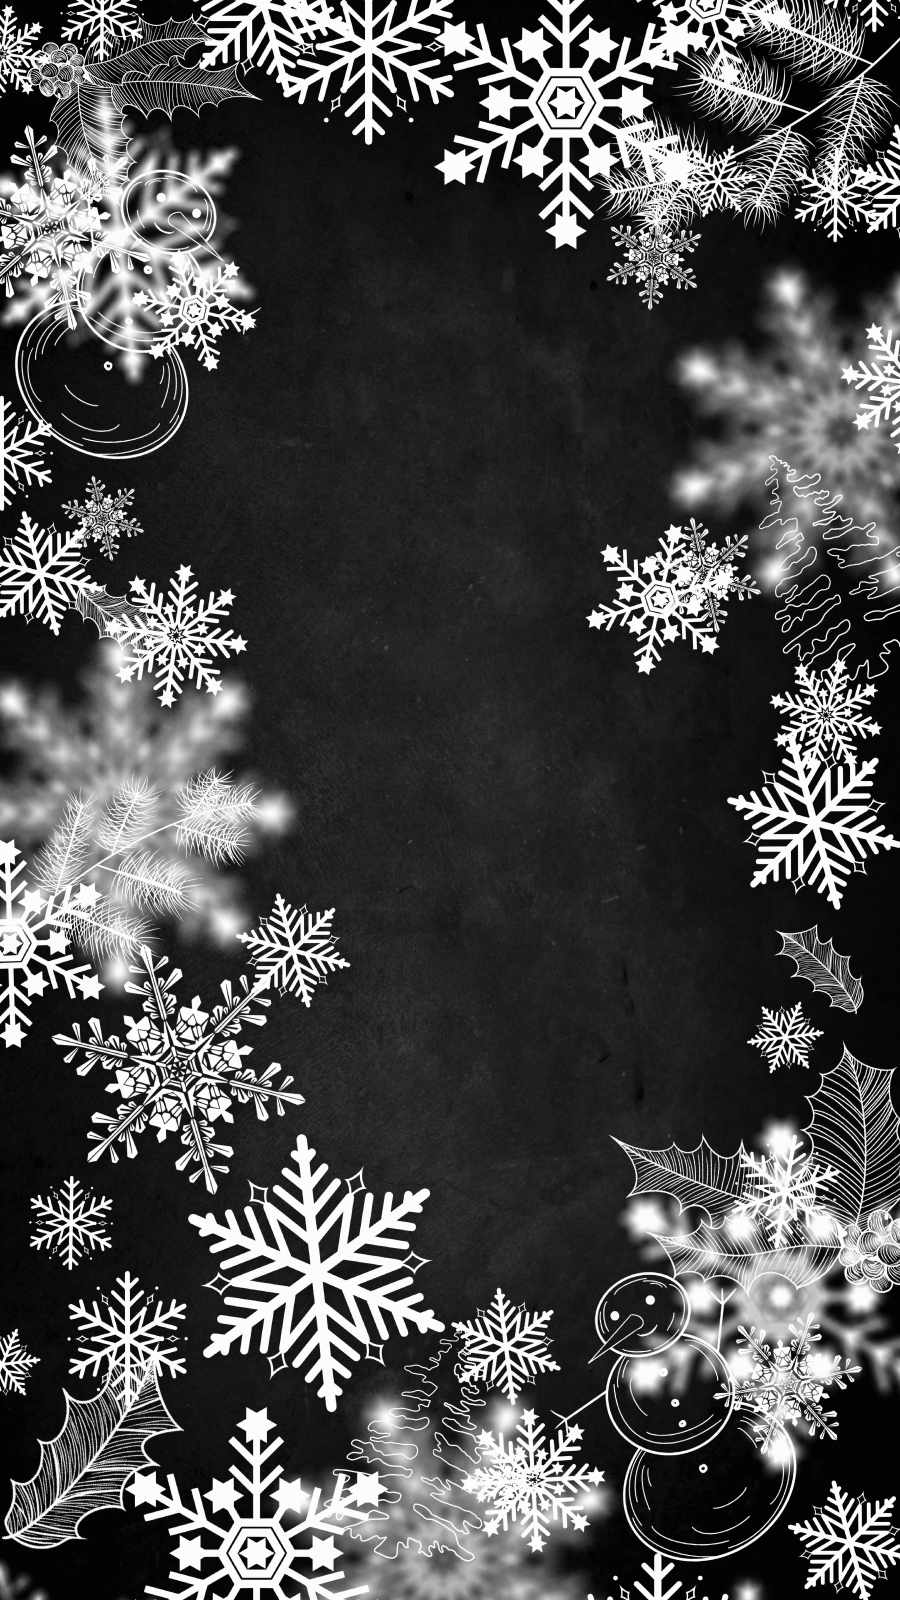 Winter Snow IPhone Wallpaper Wallpaper, iPhone Wallpaper